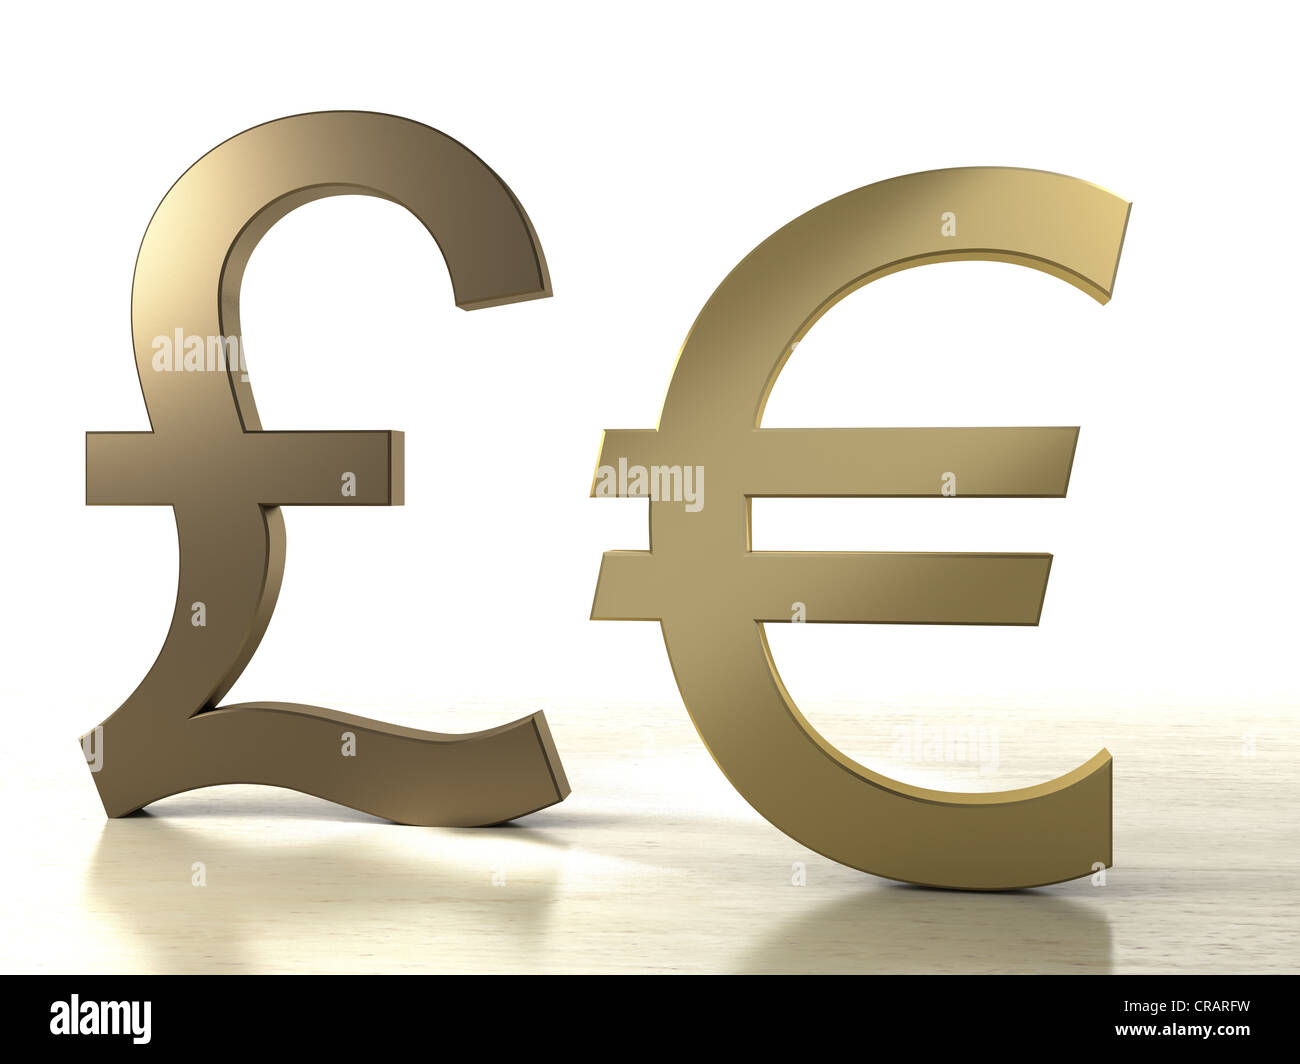 Pound symbol and Euro symbol made of brass Stock Photo